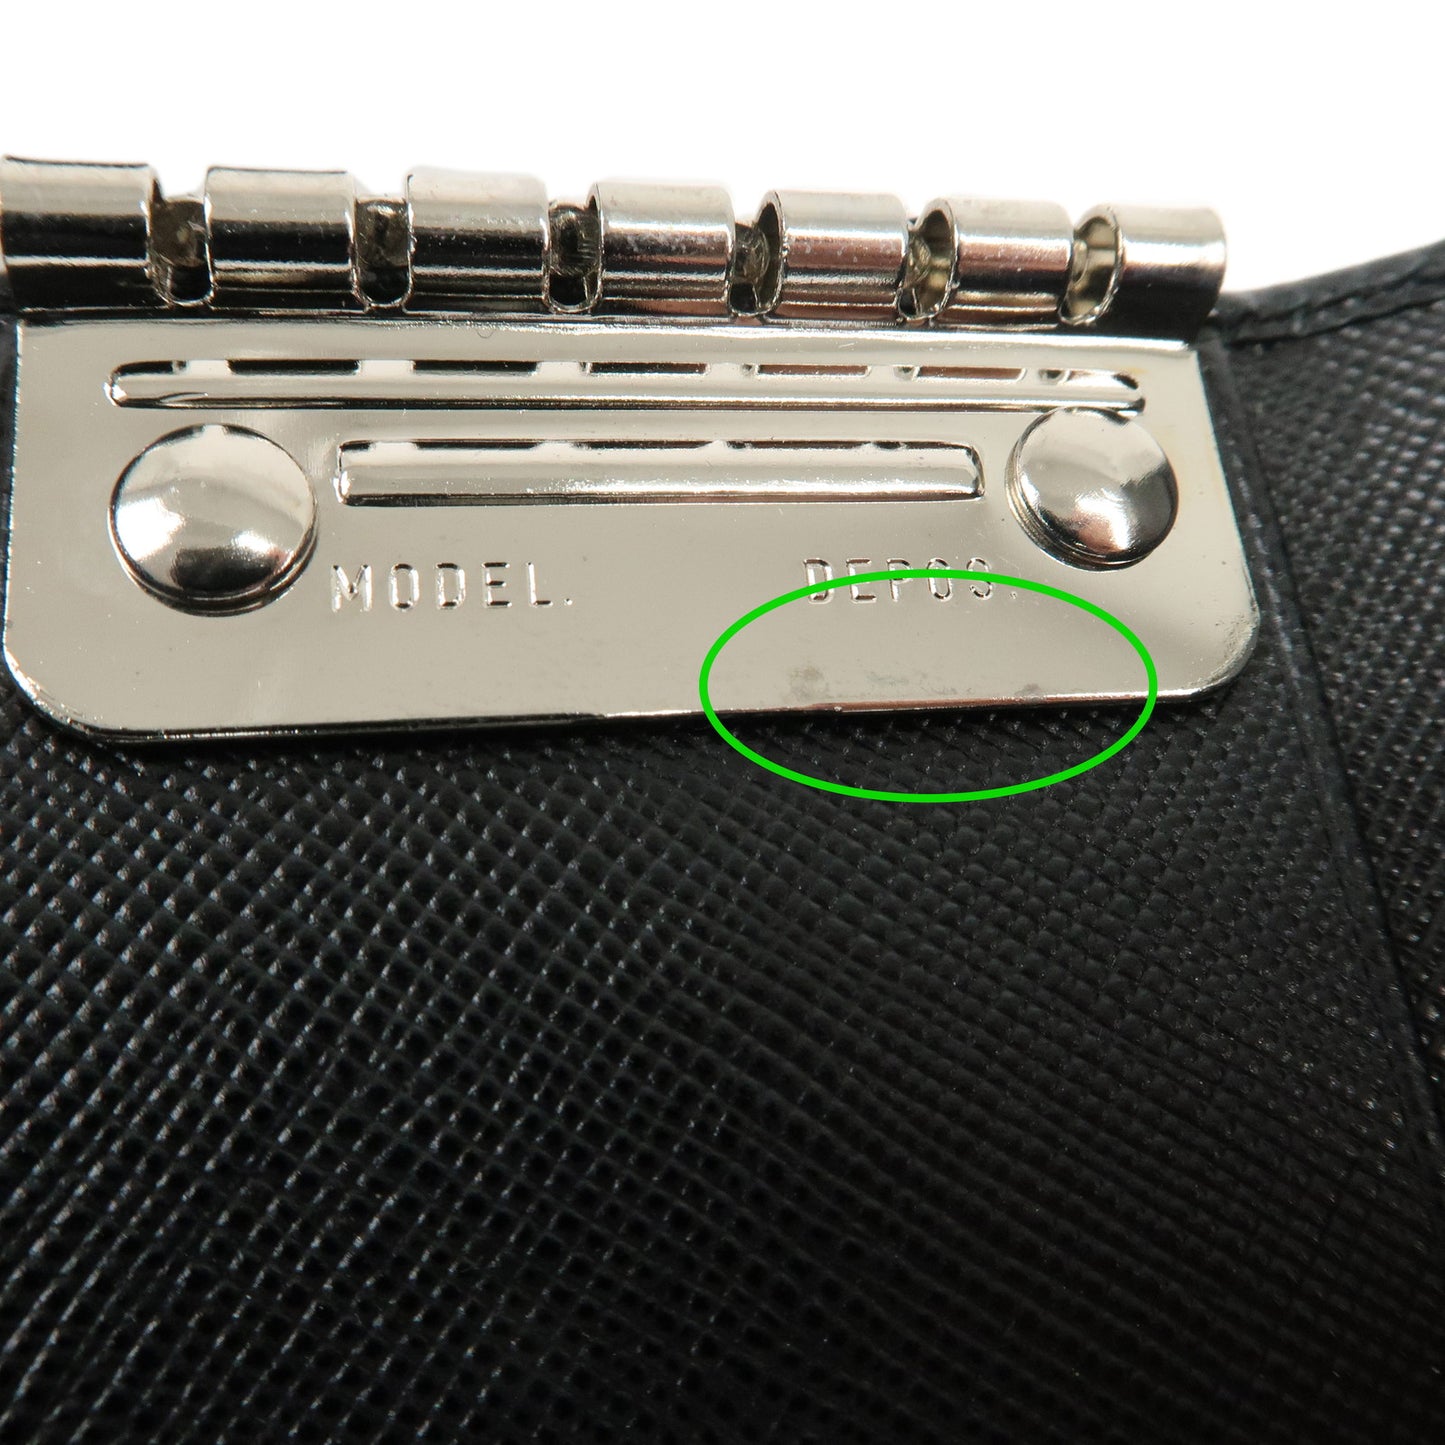 PRADA Saffiano Leather 6 Key Case Key Holder Black M25U